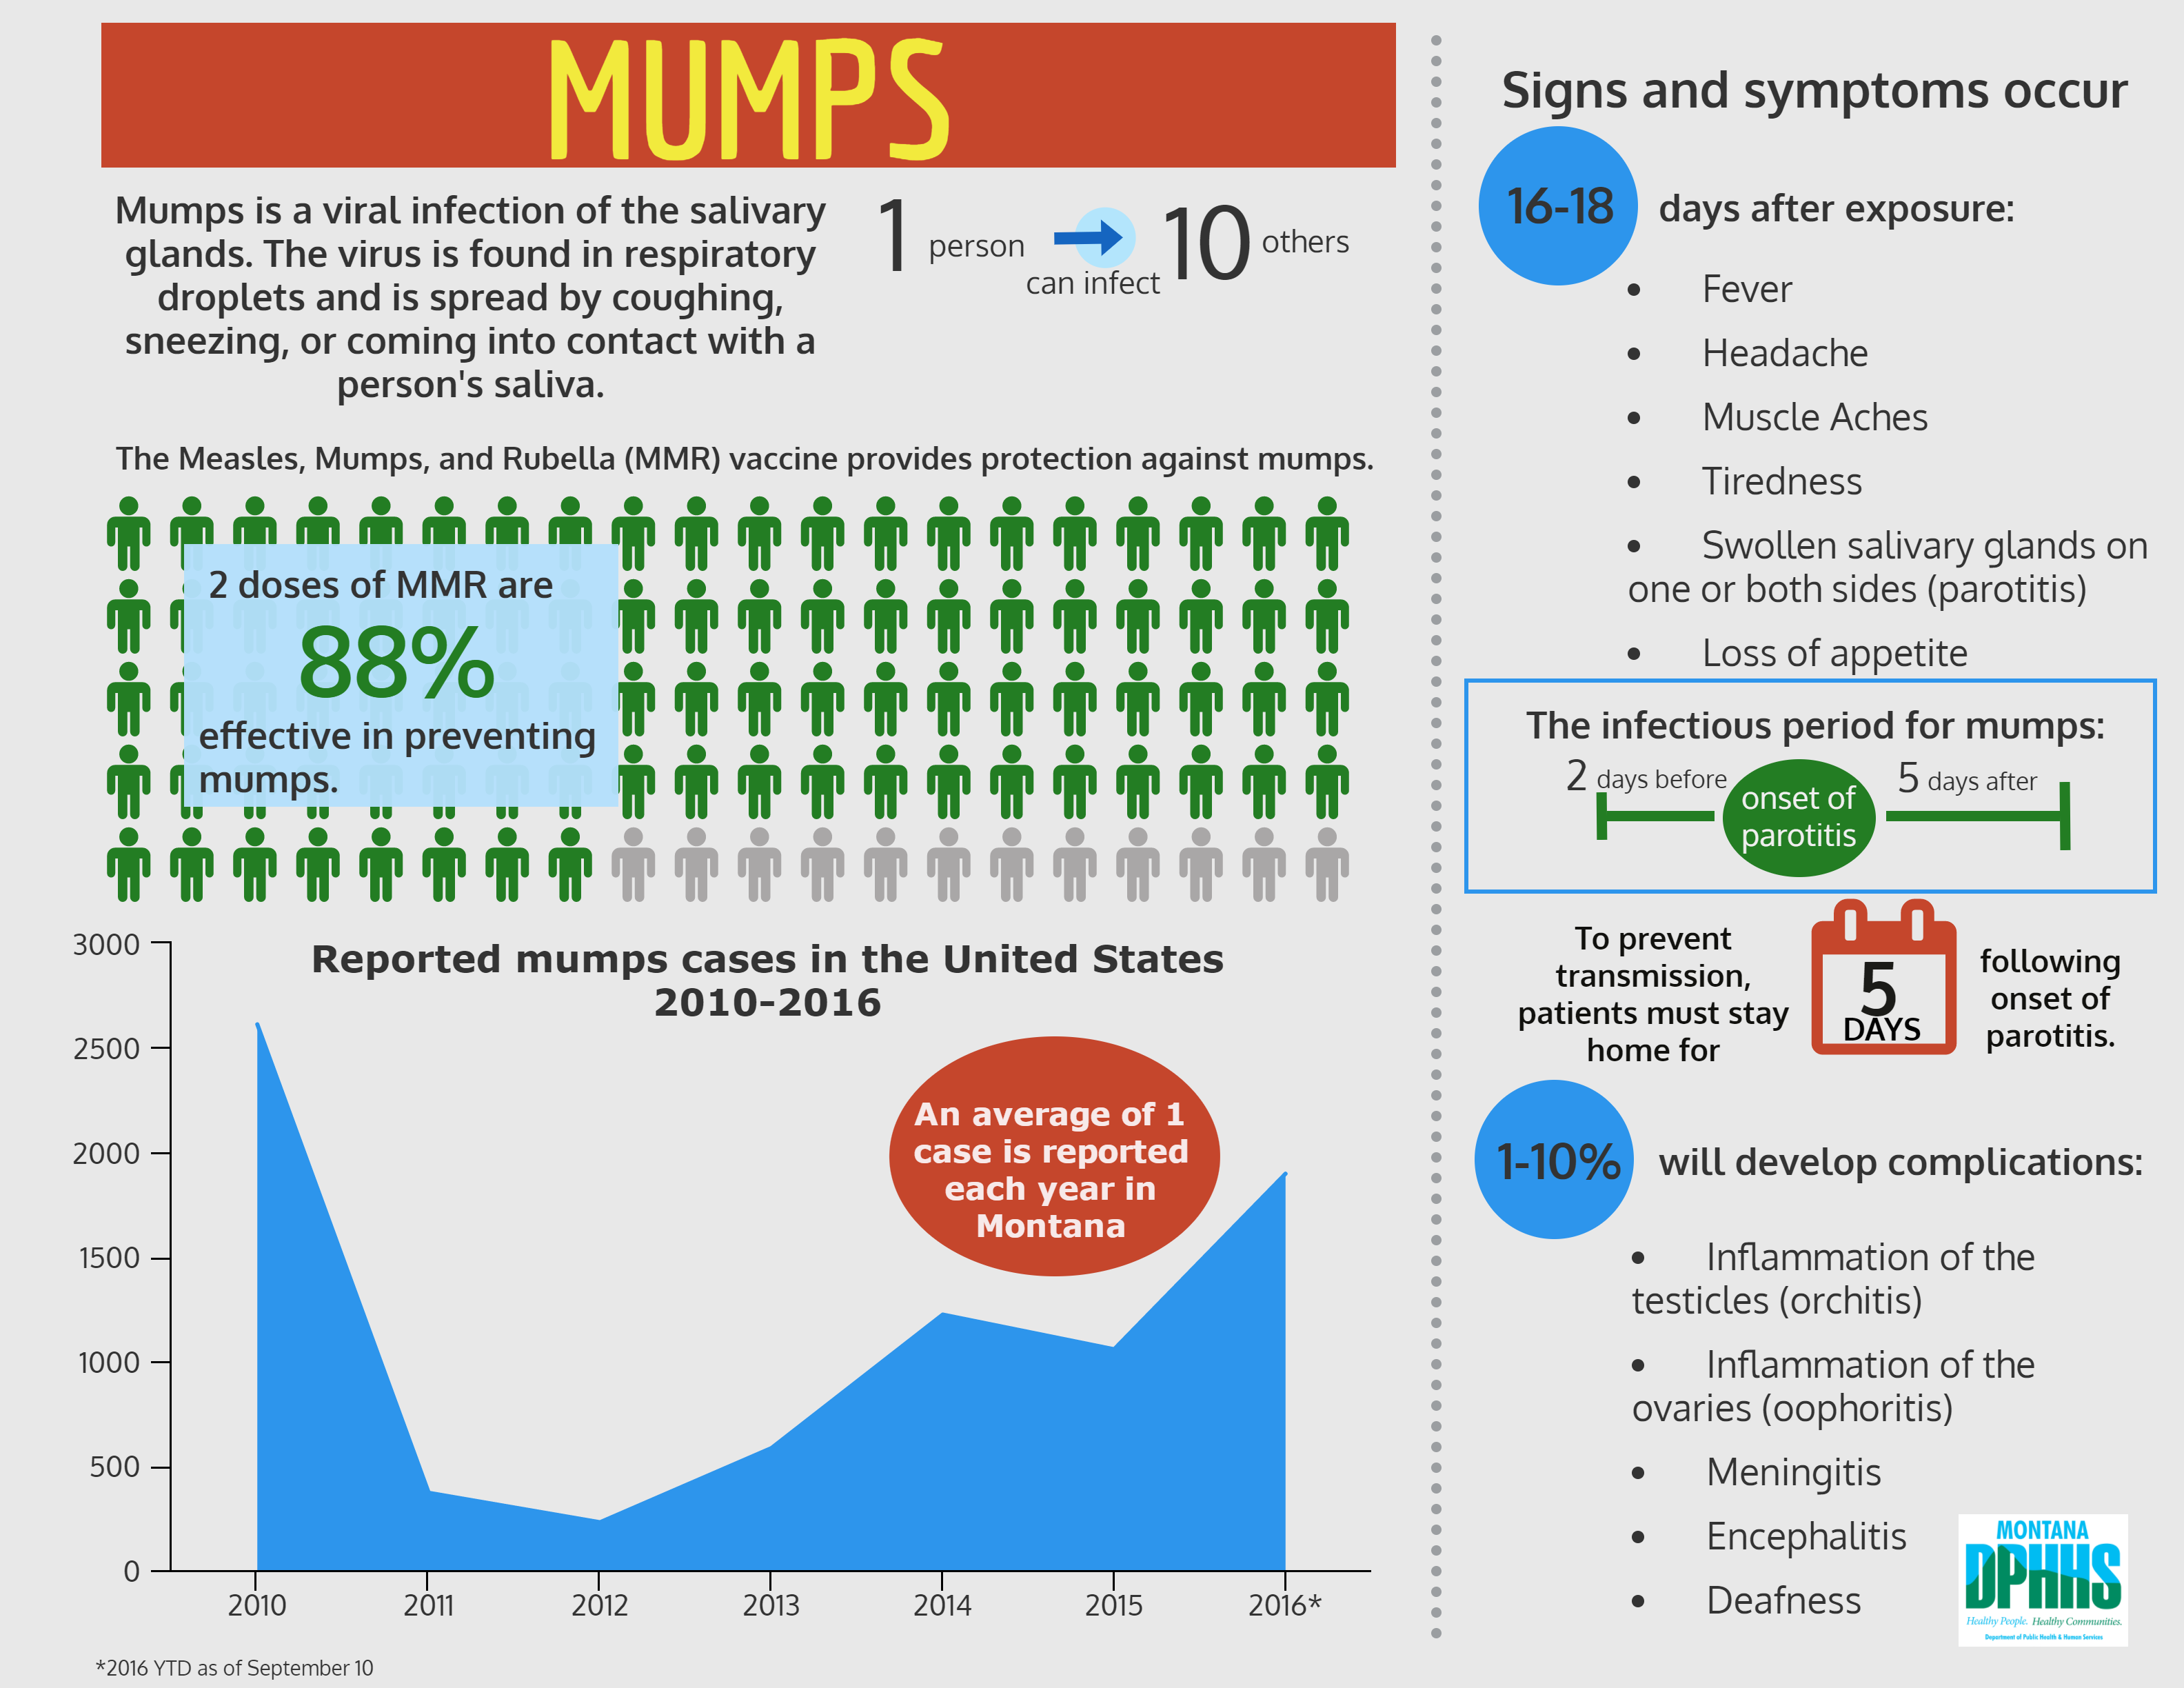 Mumps: general information